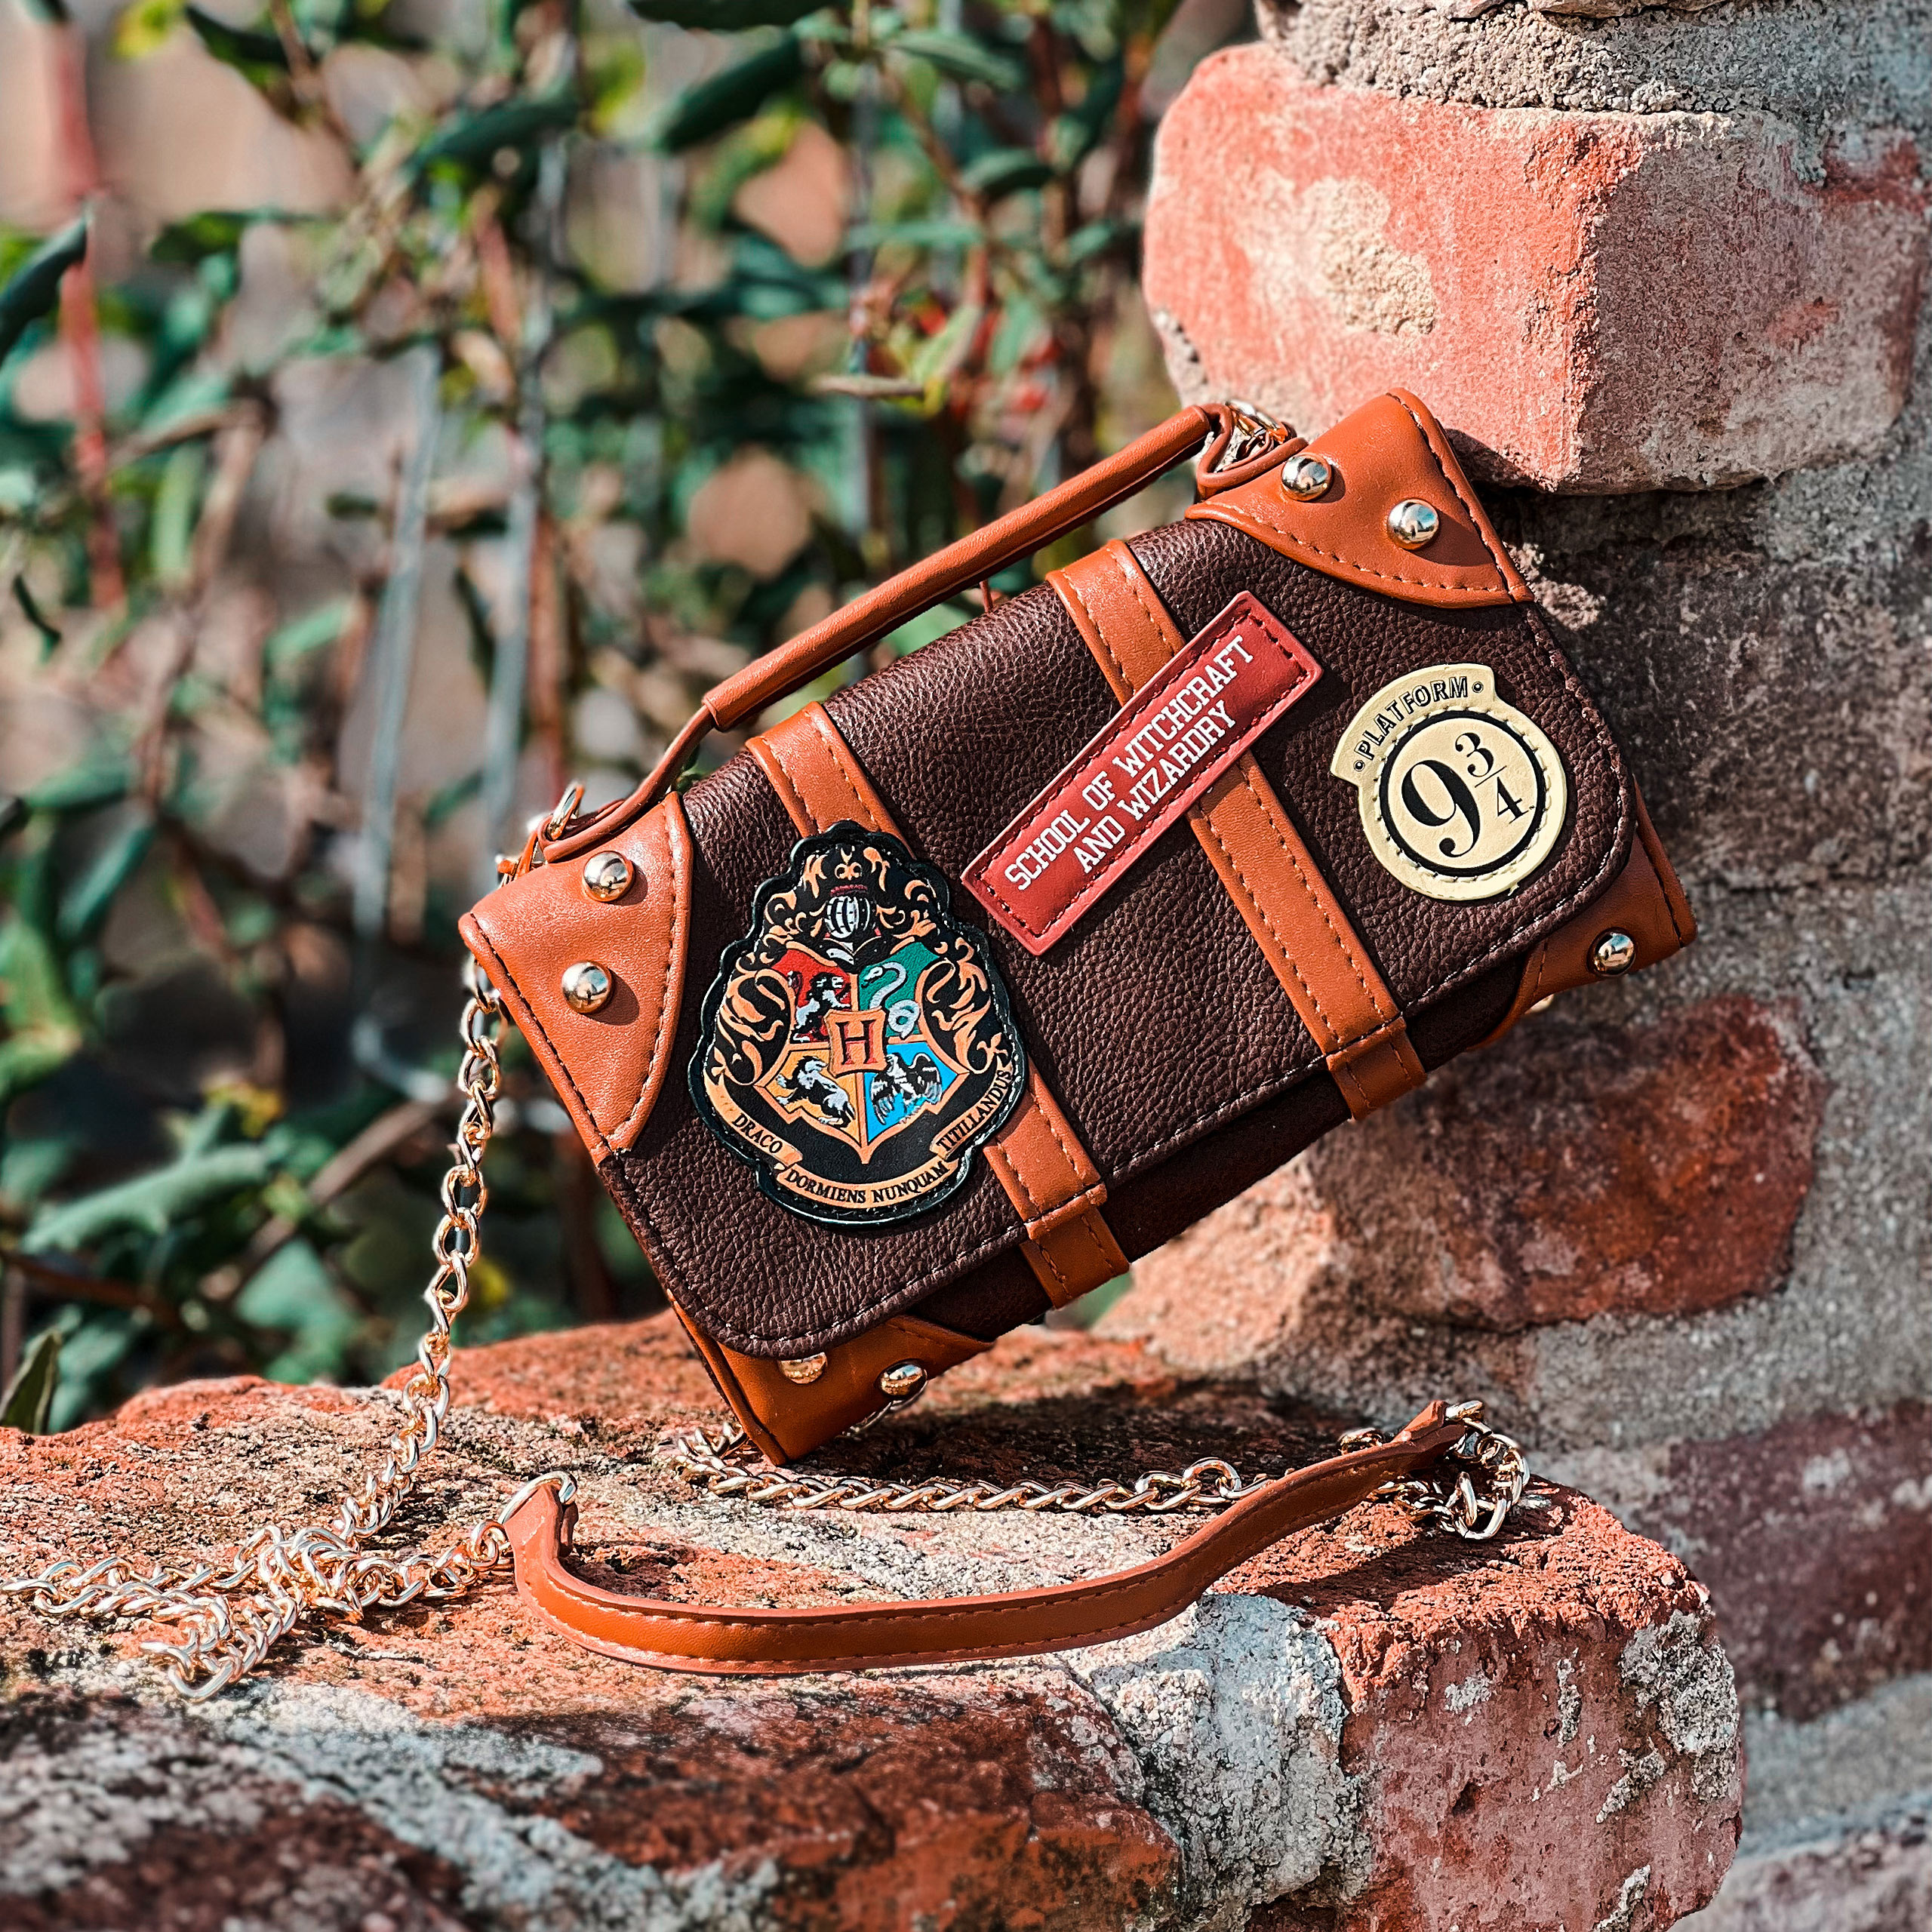 Harry Potter - Handbag with Wallet